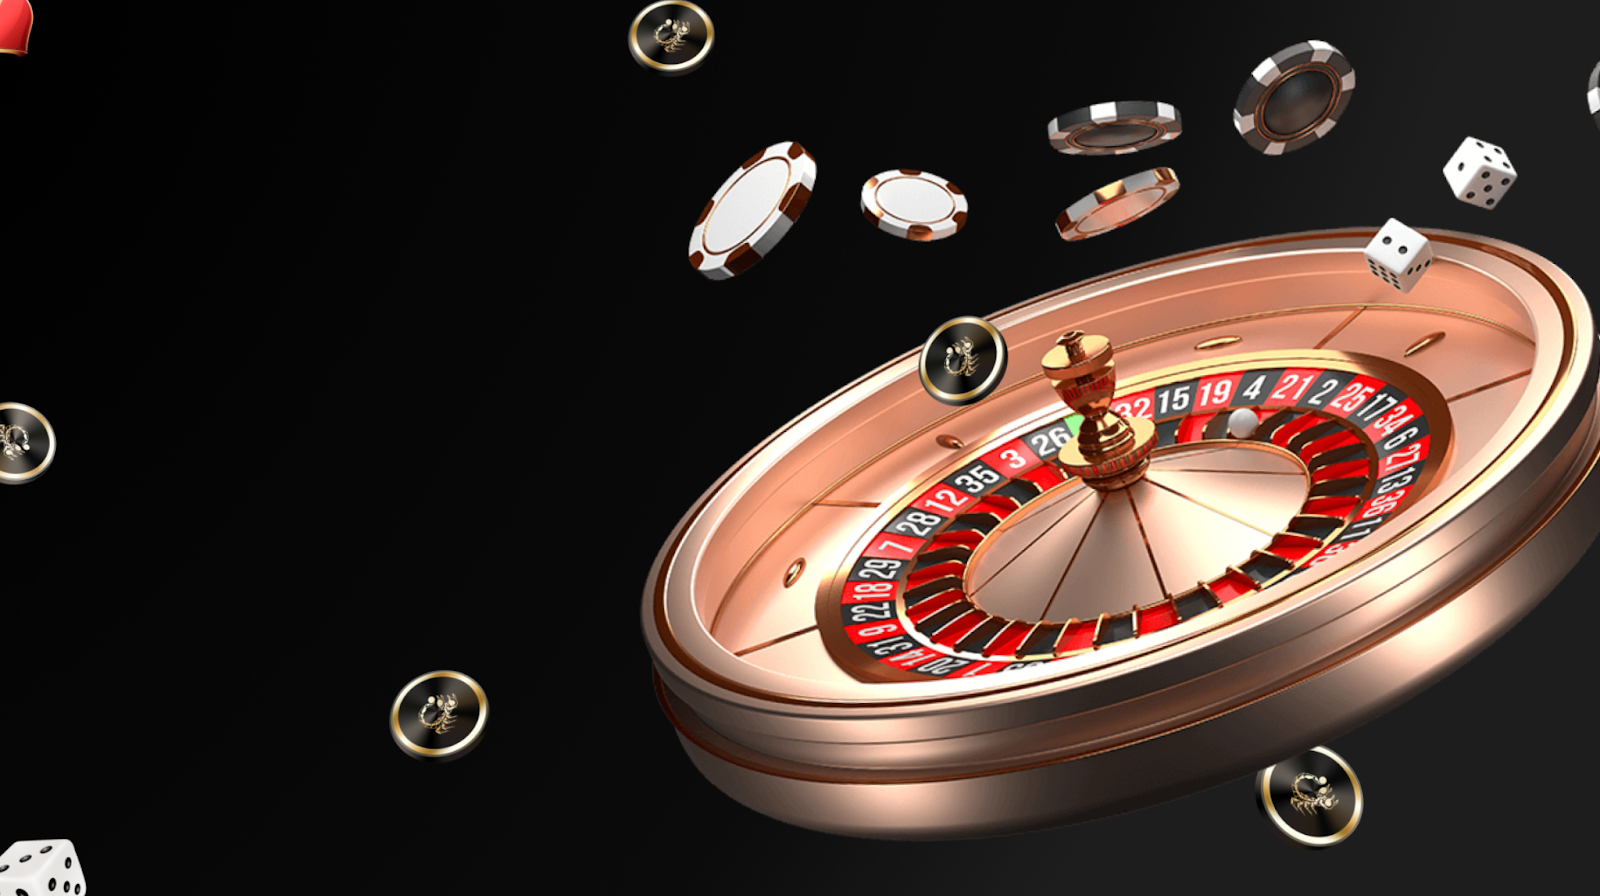 How to Buy Scorpion Casino $SCORP Token - In 4 Easy Steps